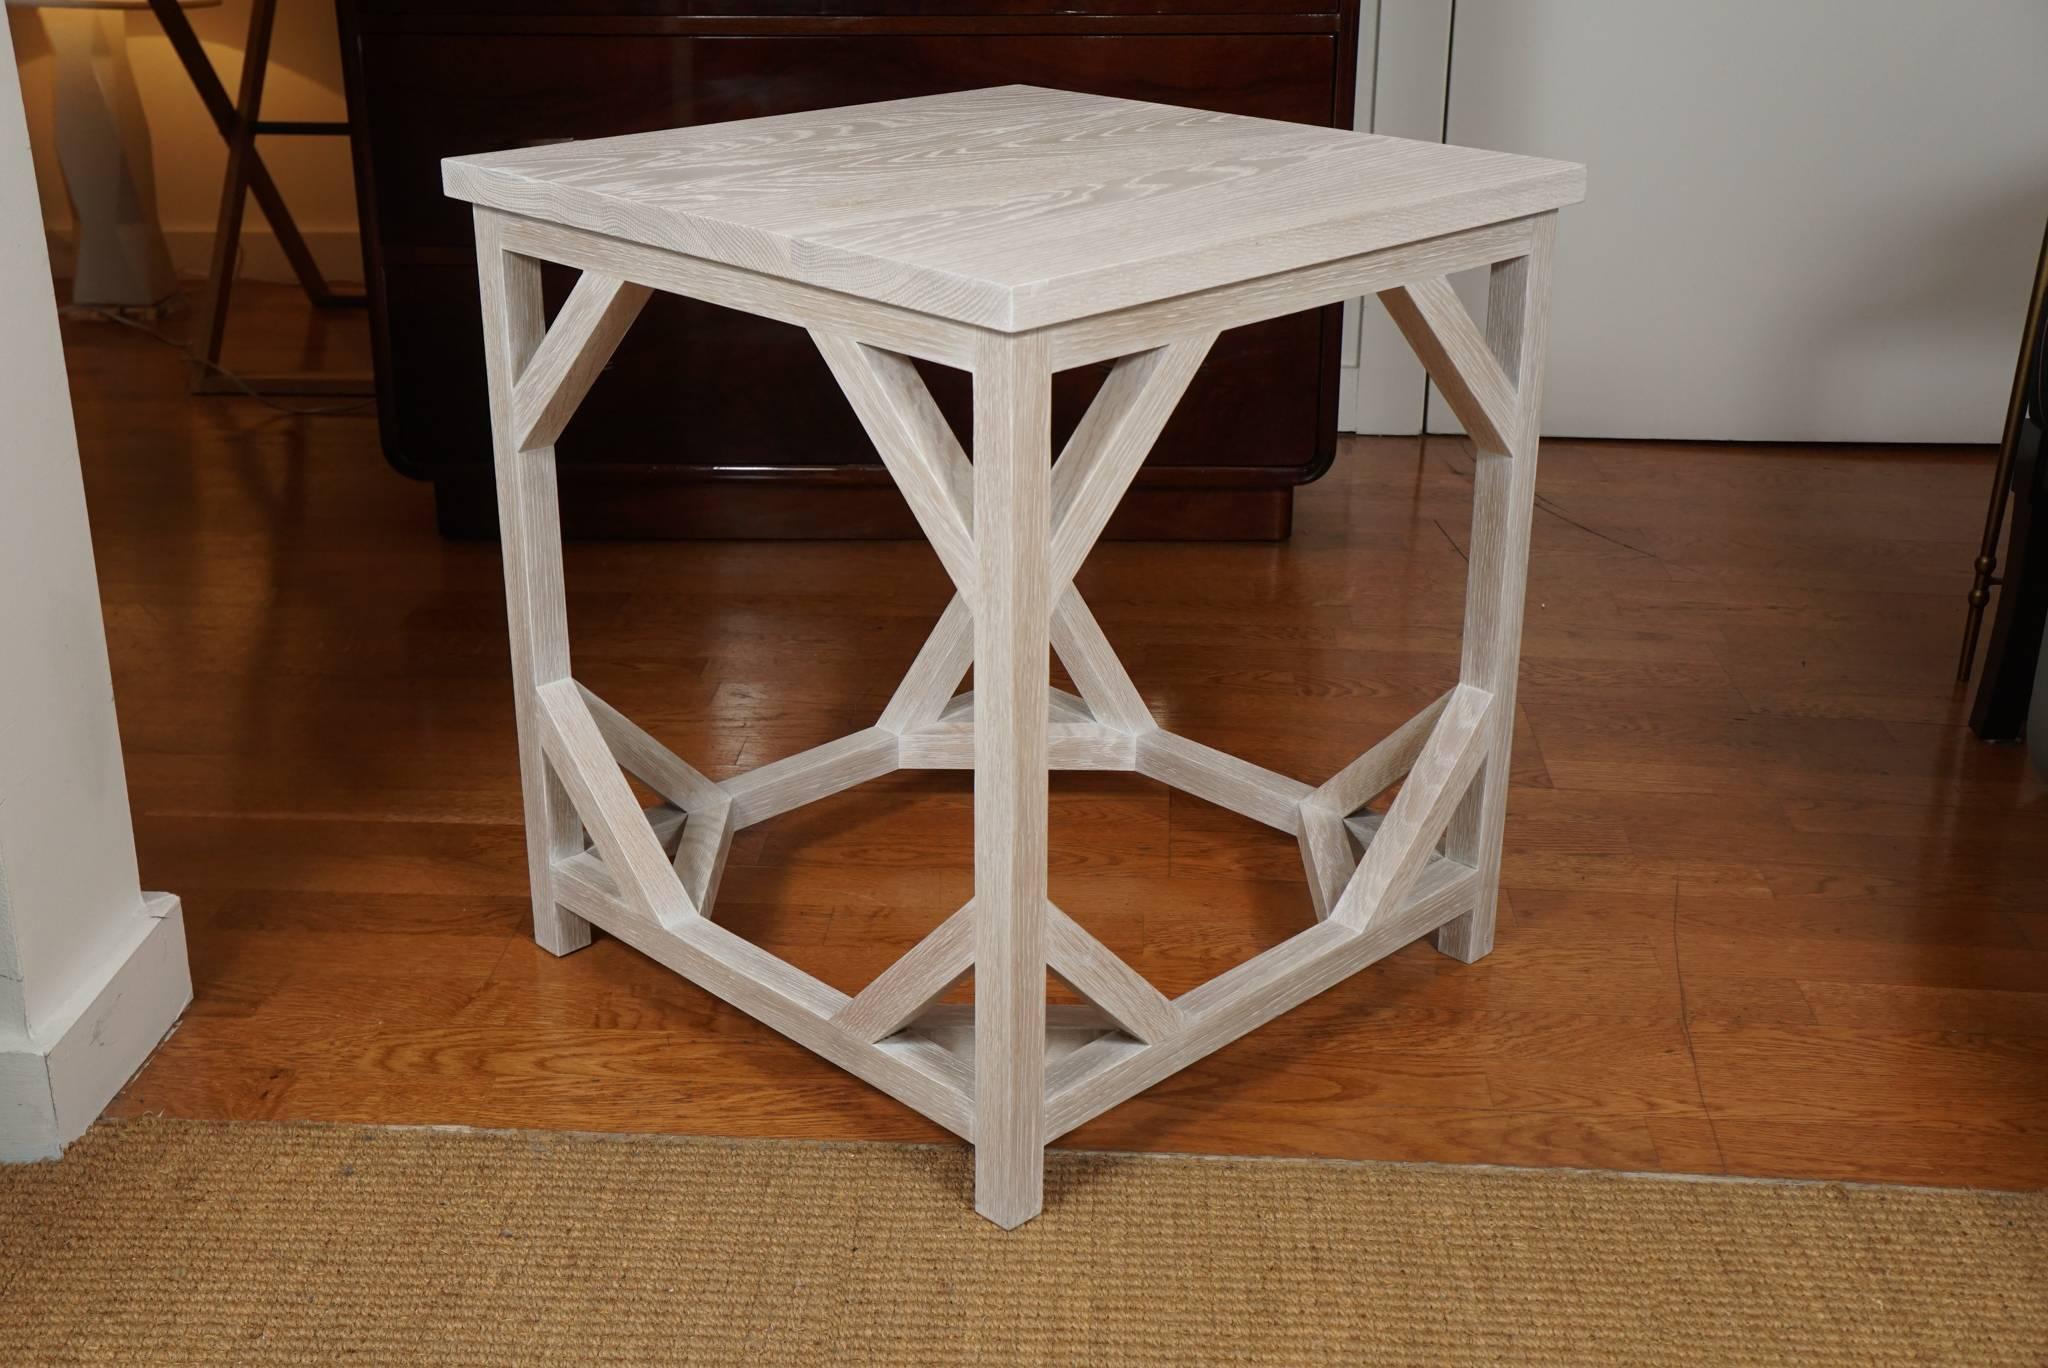 striking, white oak side table, with decorative leg brackets.